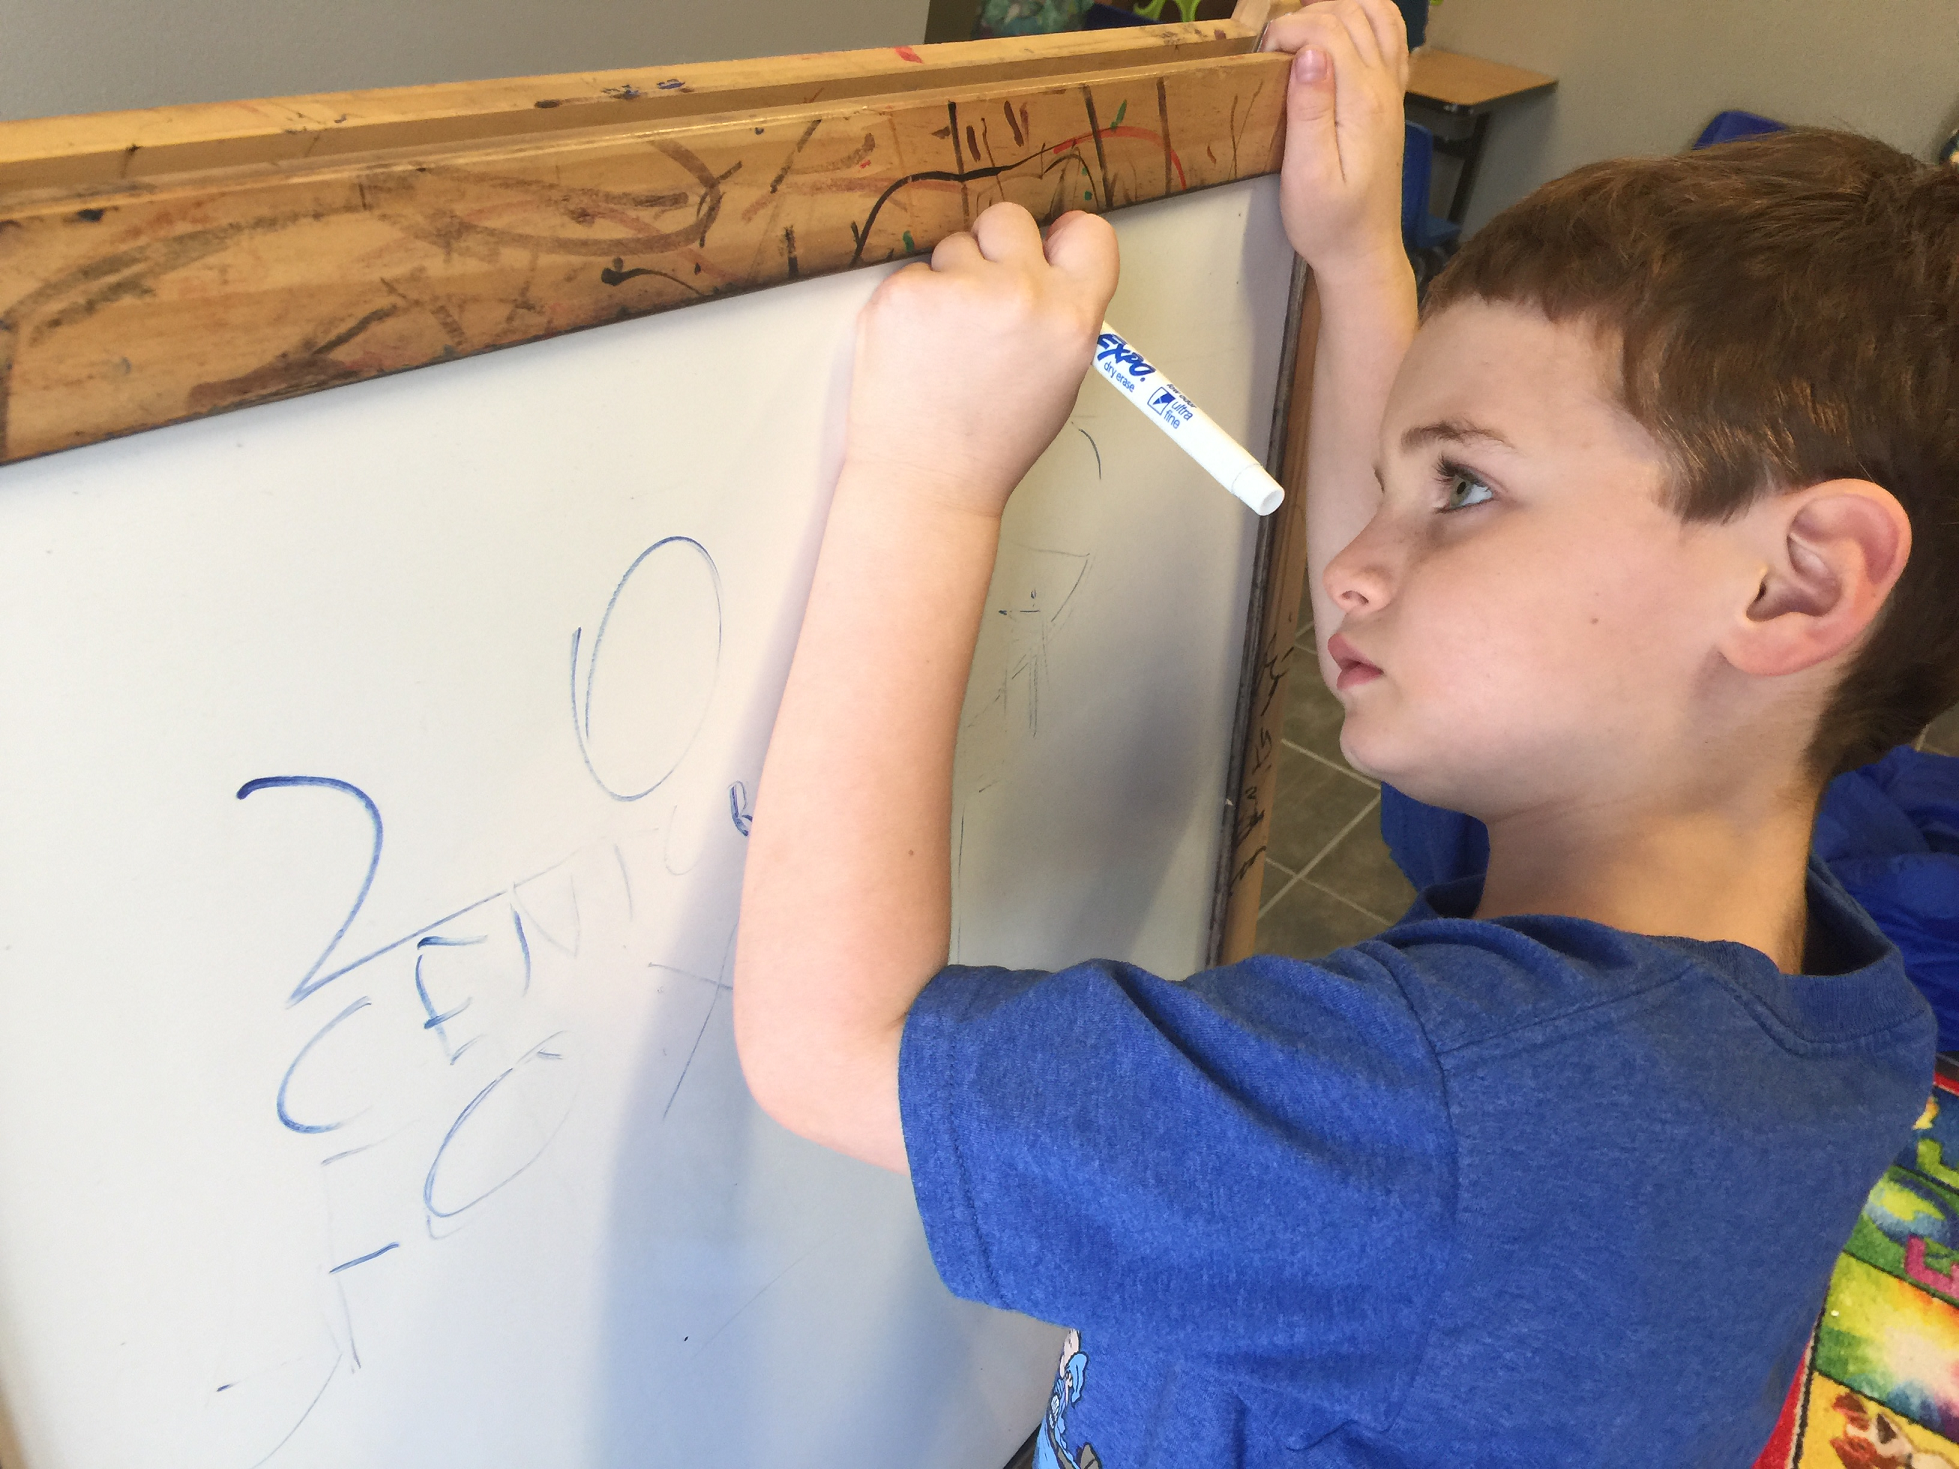 Boy writing on whiteboard